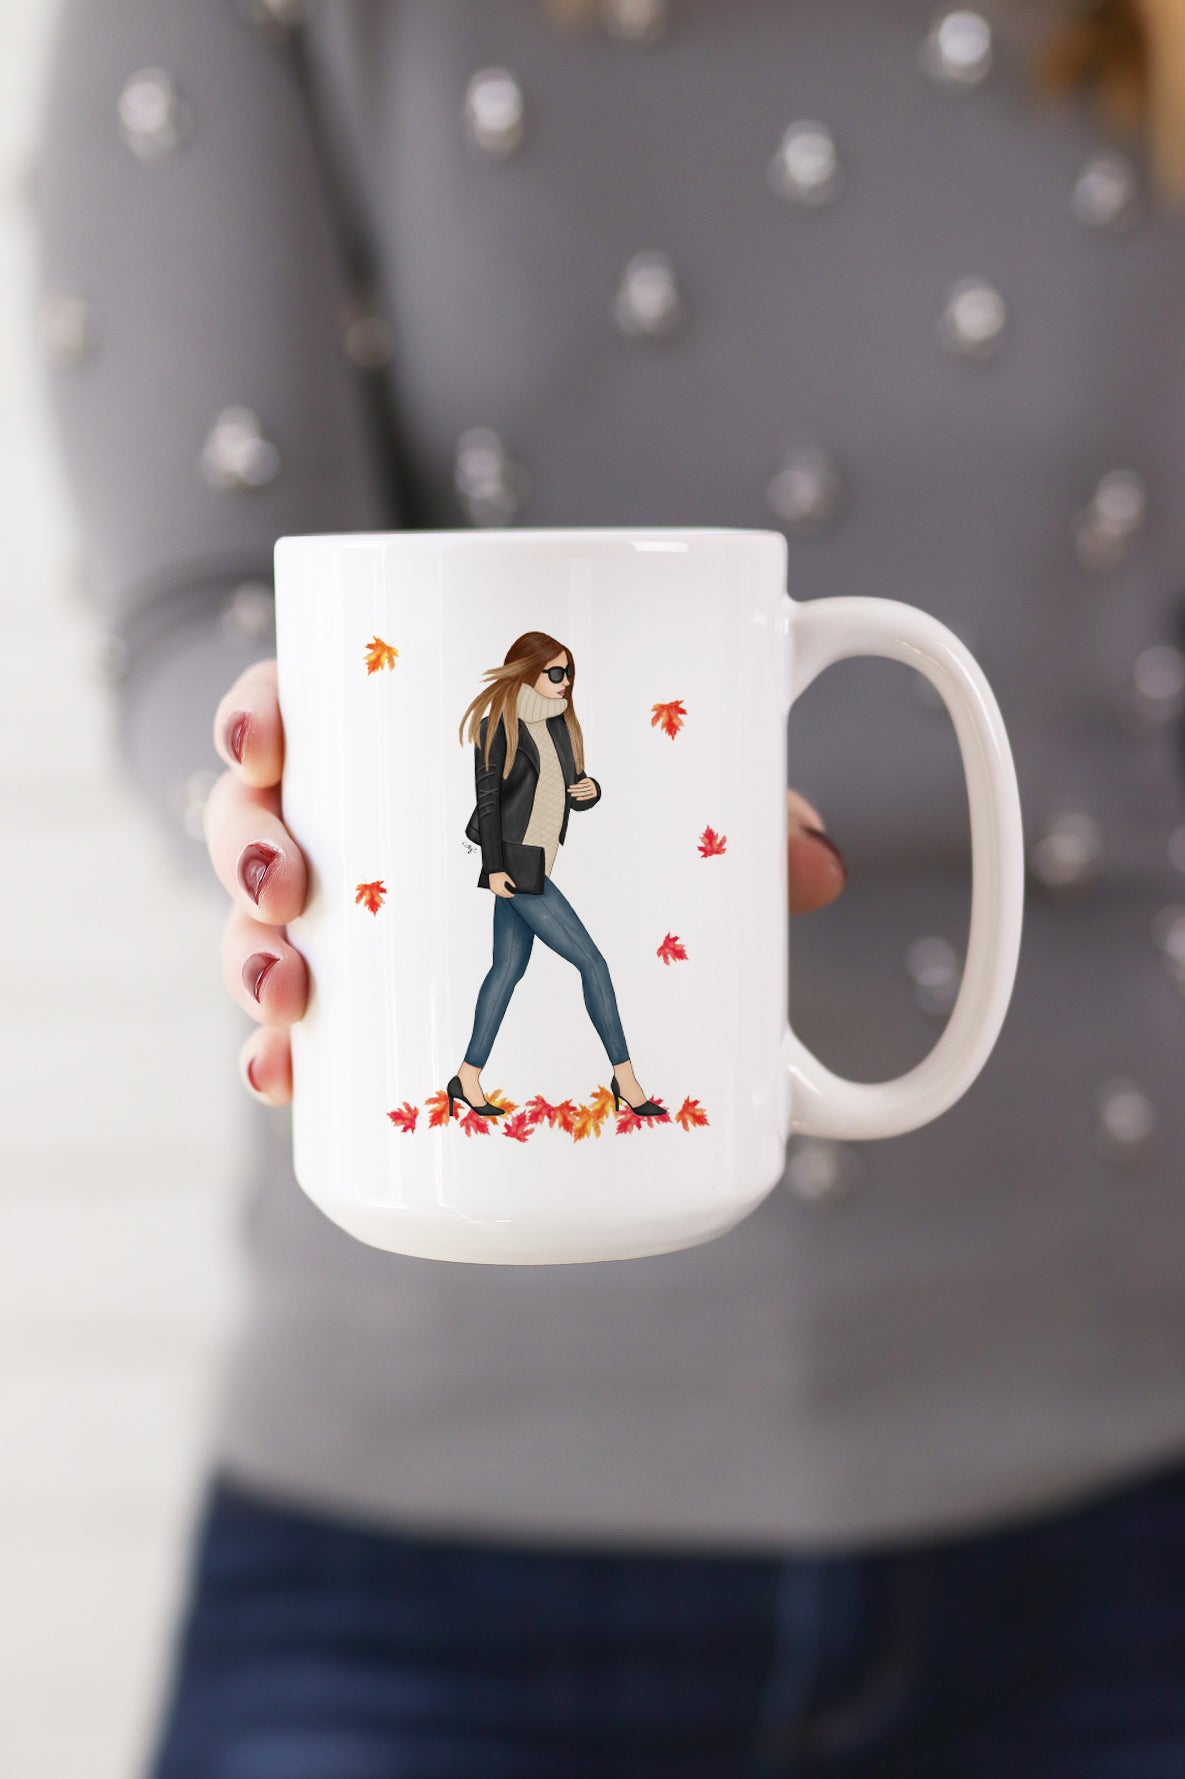 Happiness Is Warm Coffee On A Crisp Fall Day – Kelly Elizabeth Designs